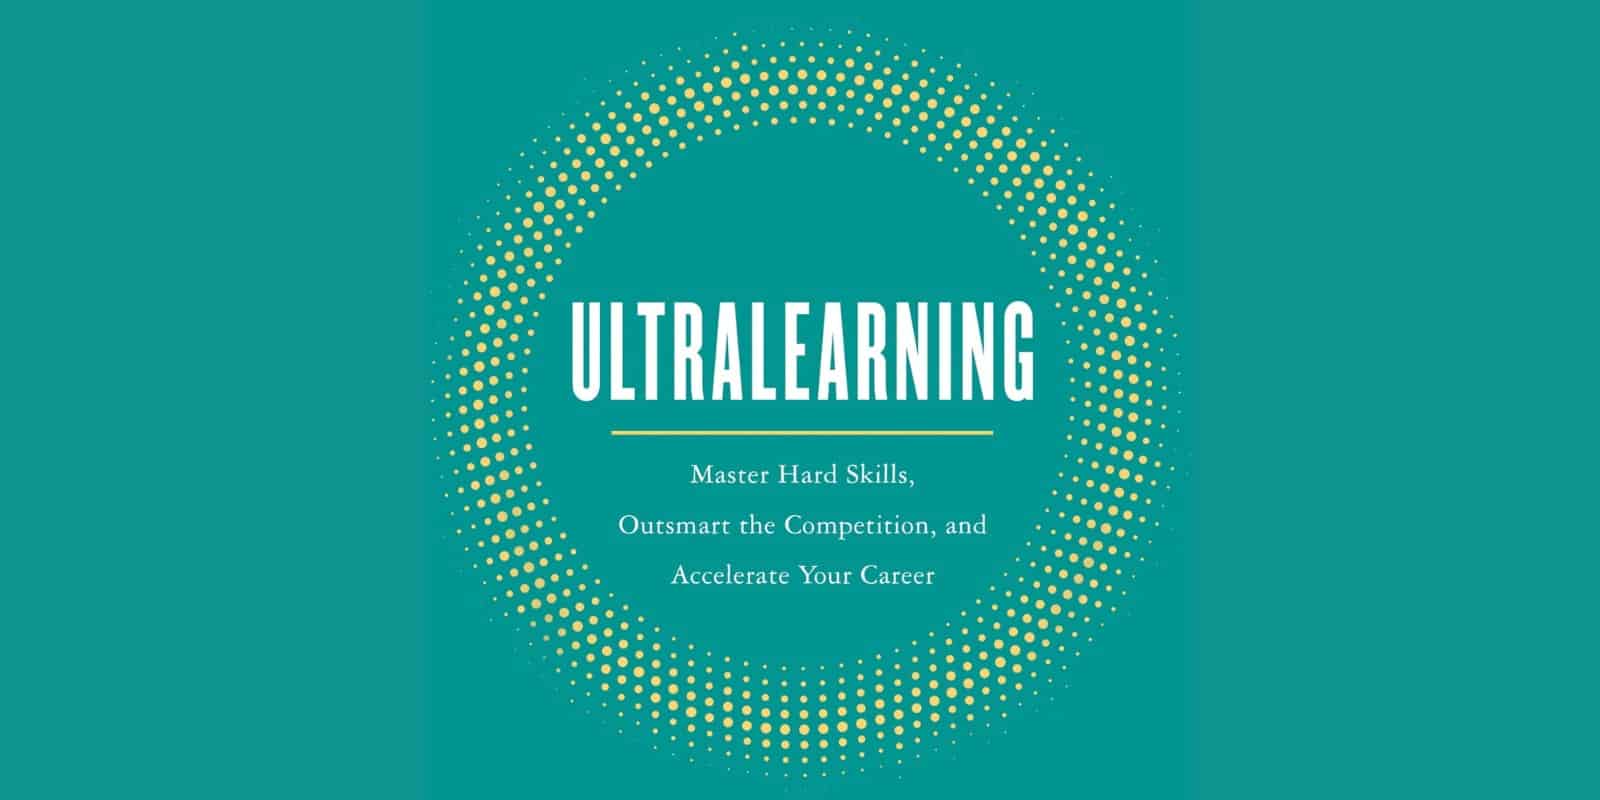 Ultralearning Book Summary